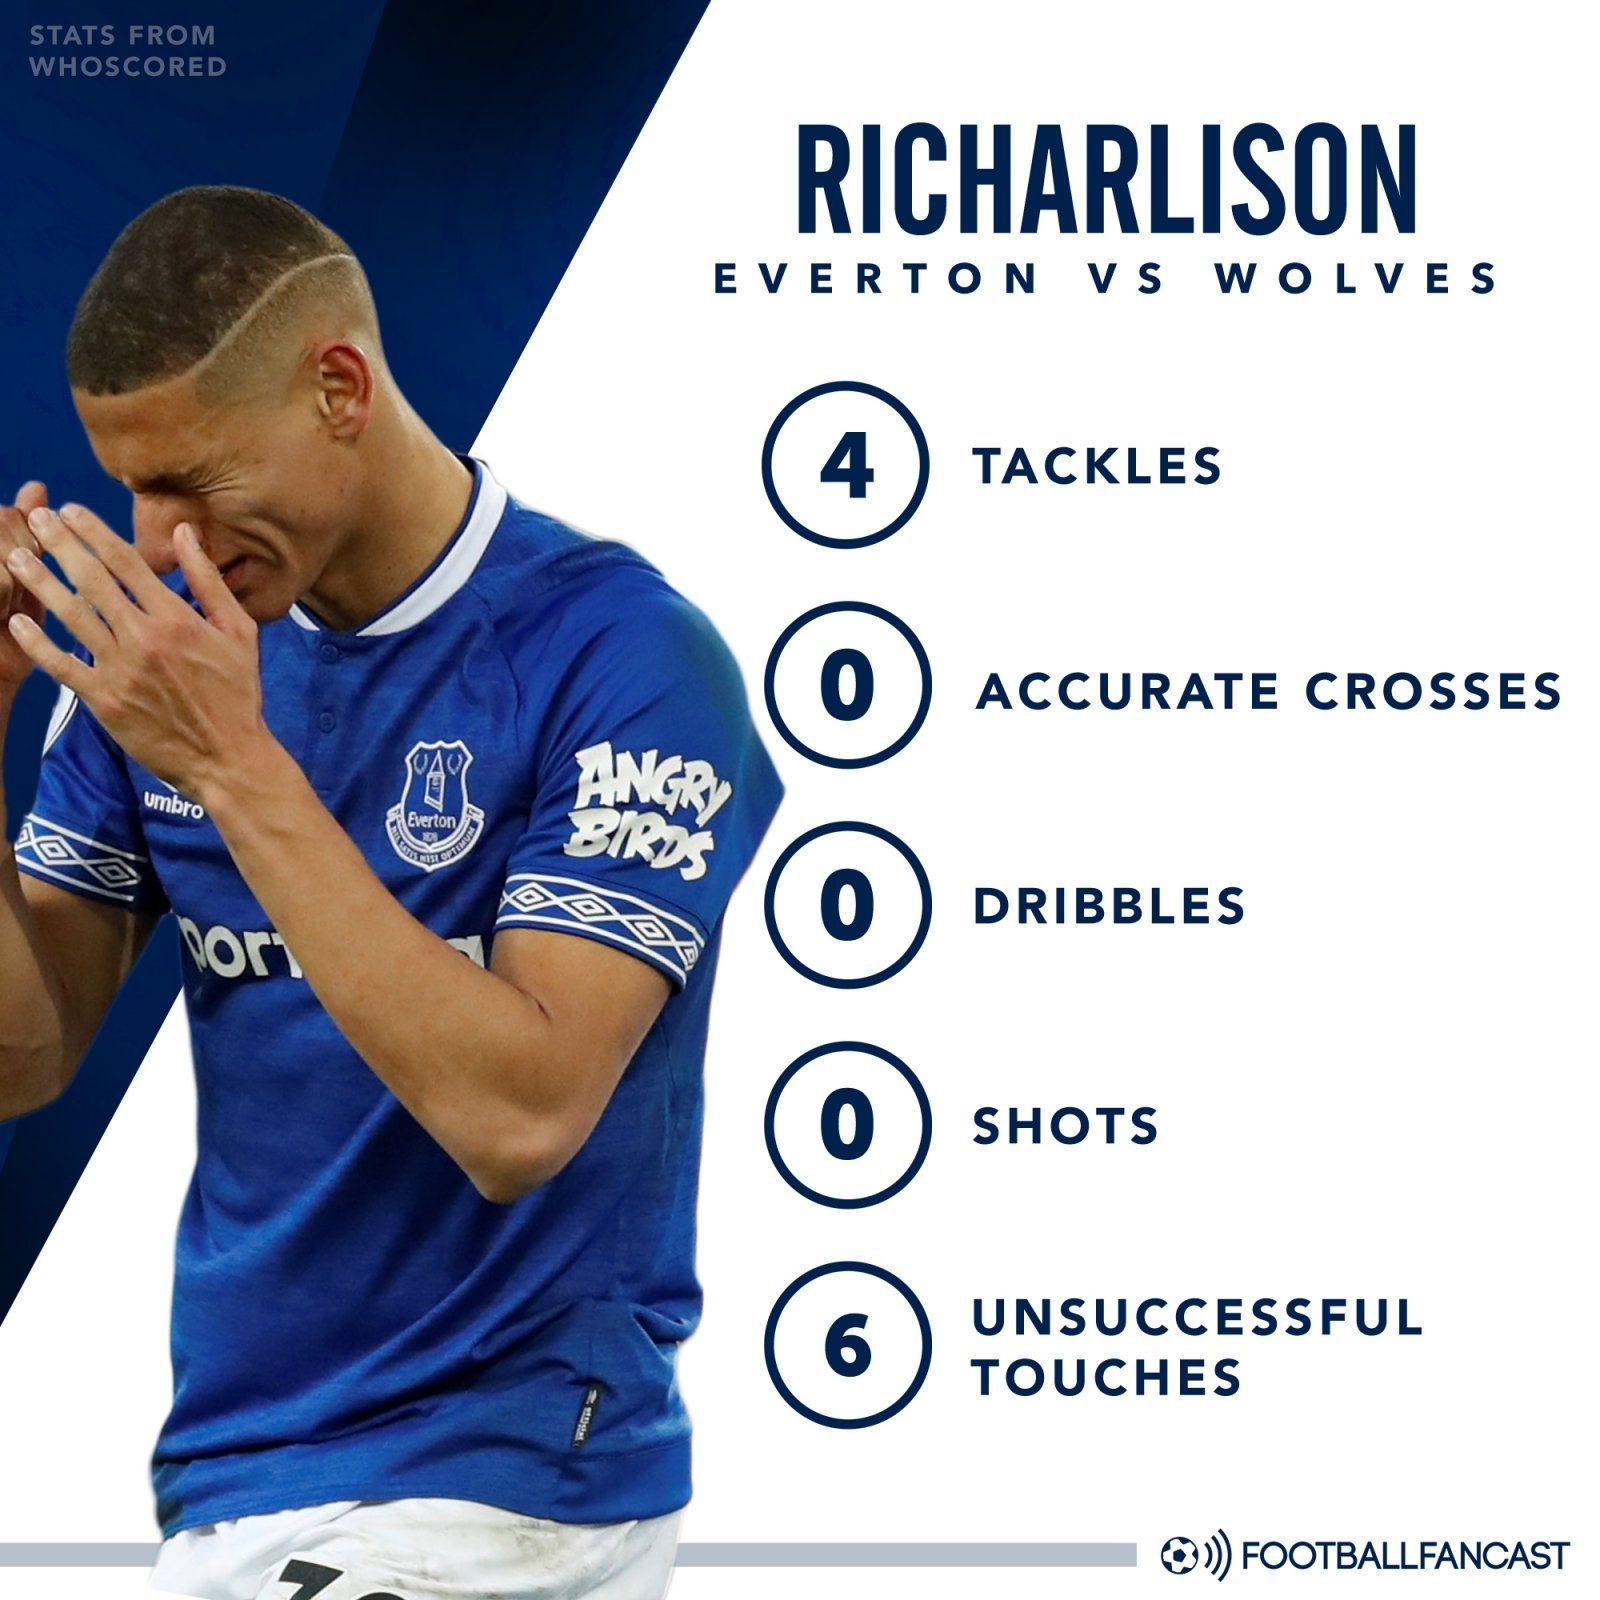 Richarlison stats vs Wolves